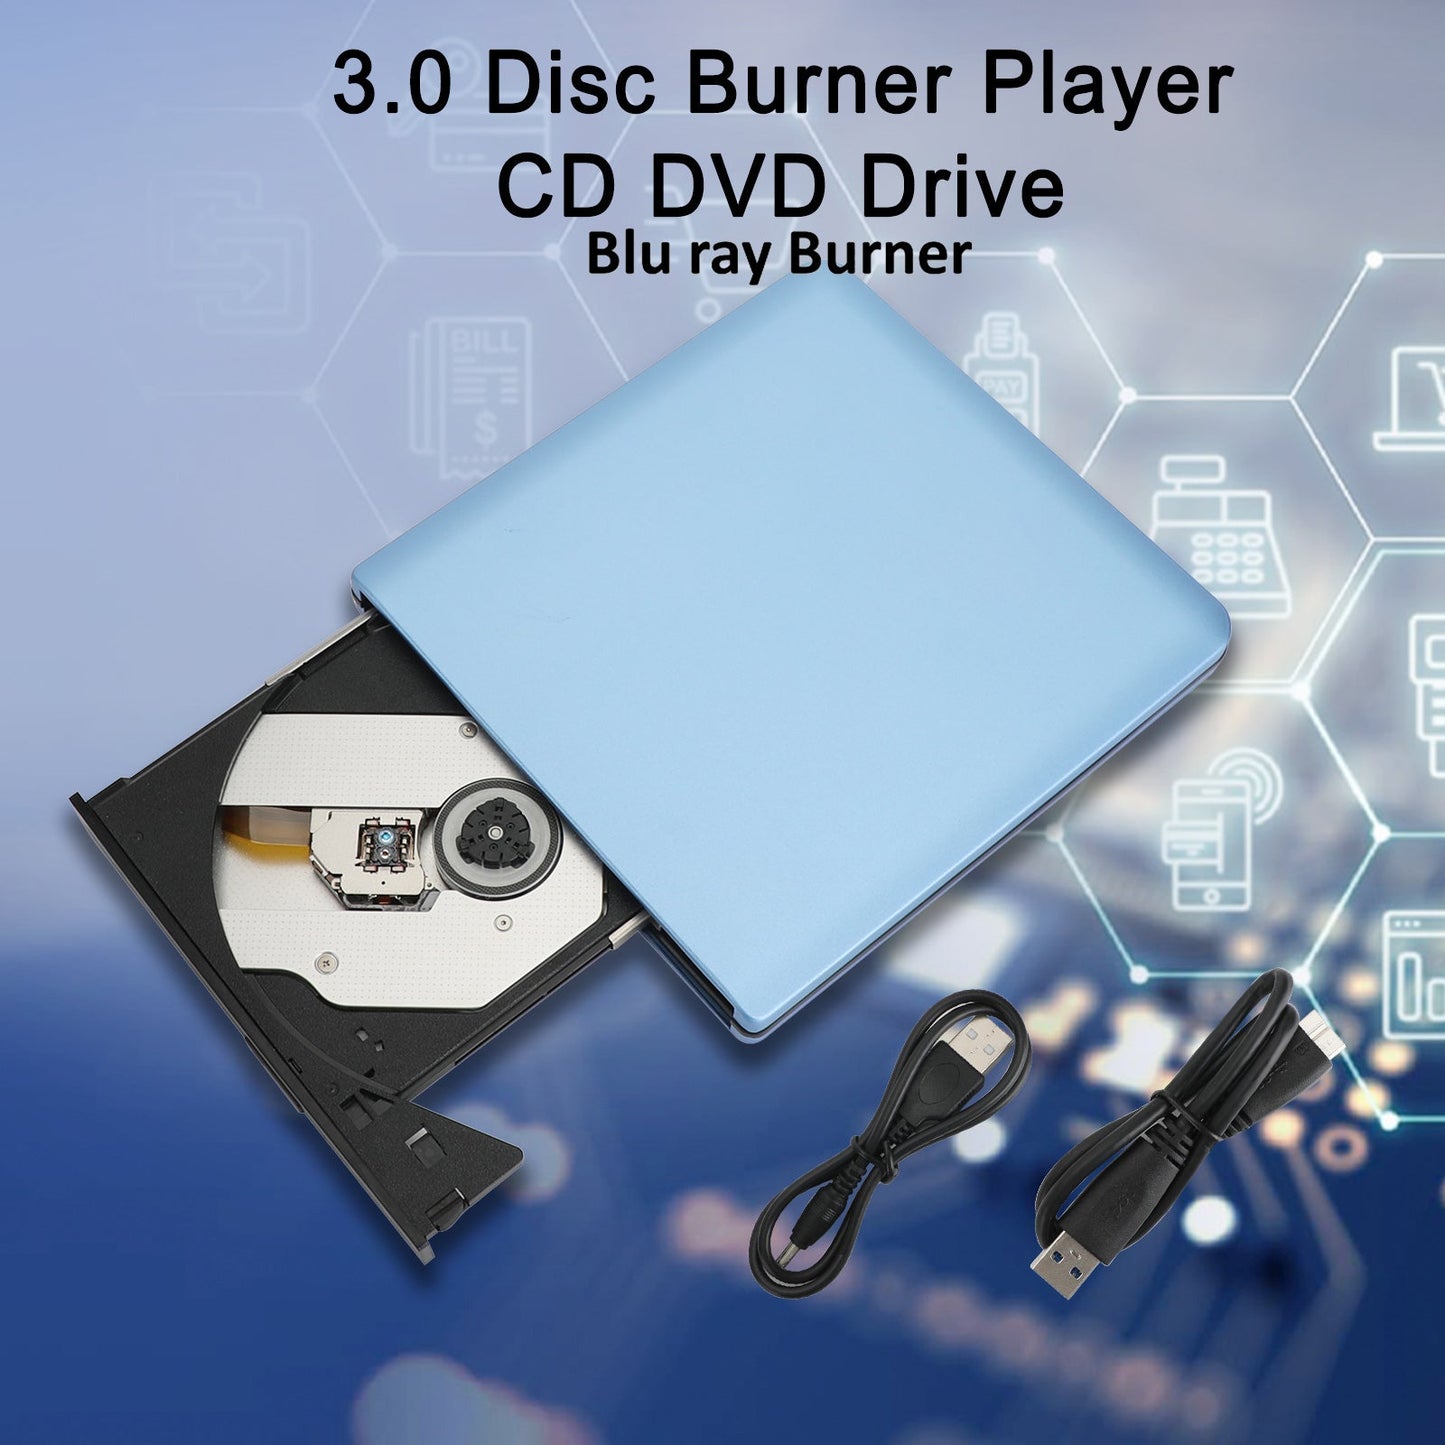 Blu ray Burner USB External BD-R BD DVD CD RW Disc Writer Movie Player Black